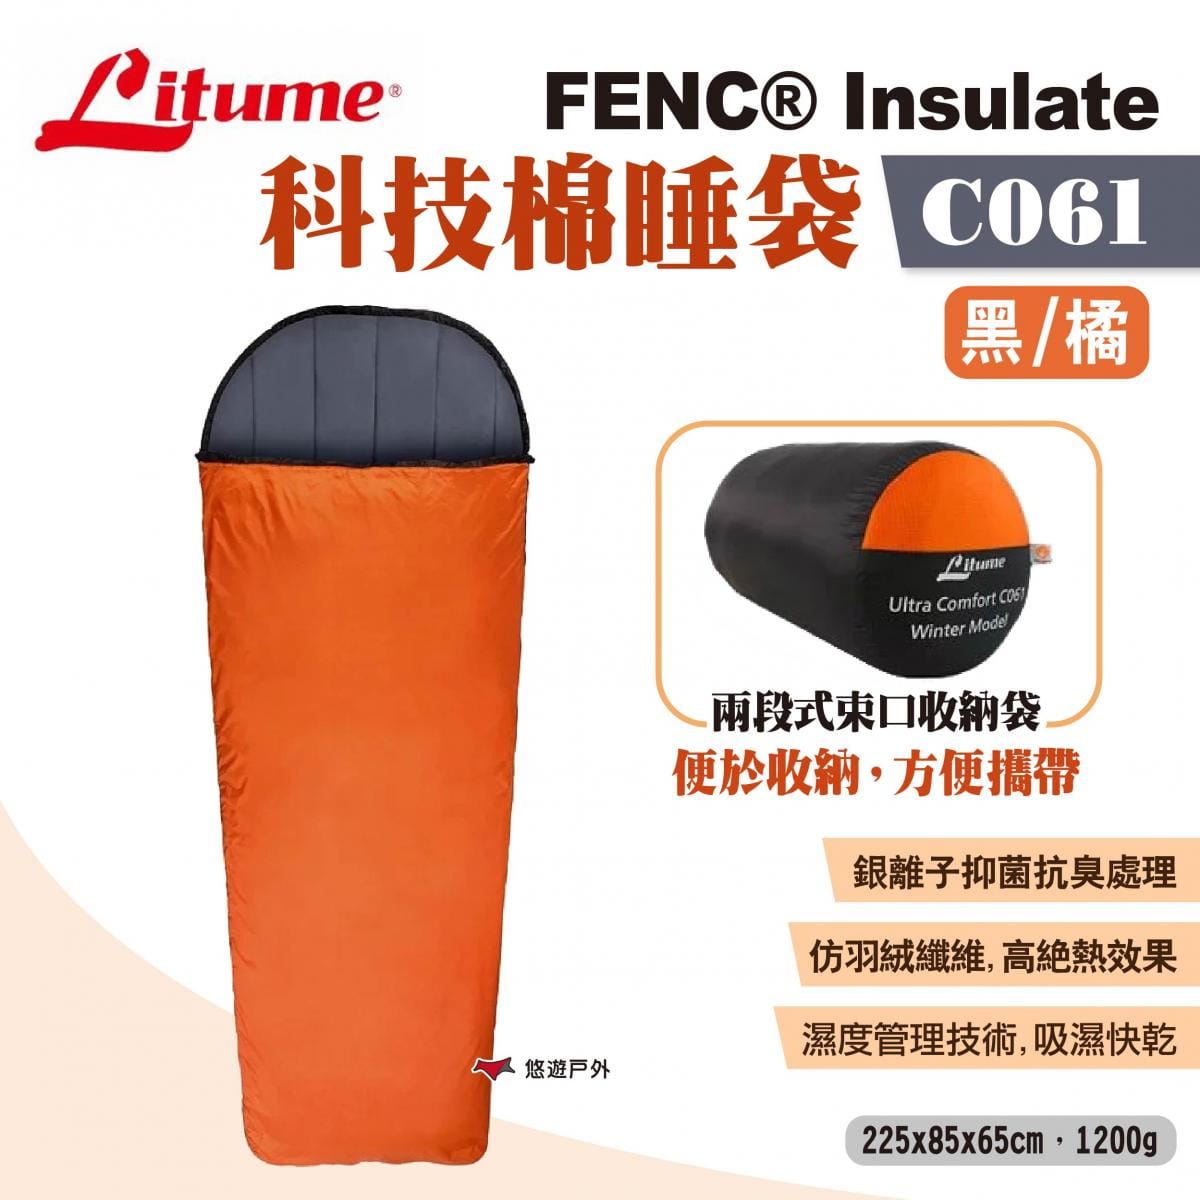 【LITUME】意都美 FENC® Insulate 科技棉睡袋 C061  悠遊戶外 1